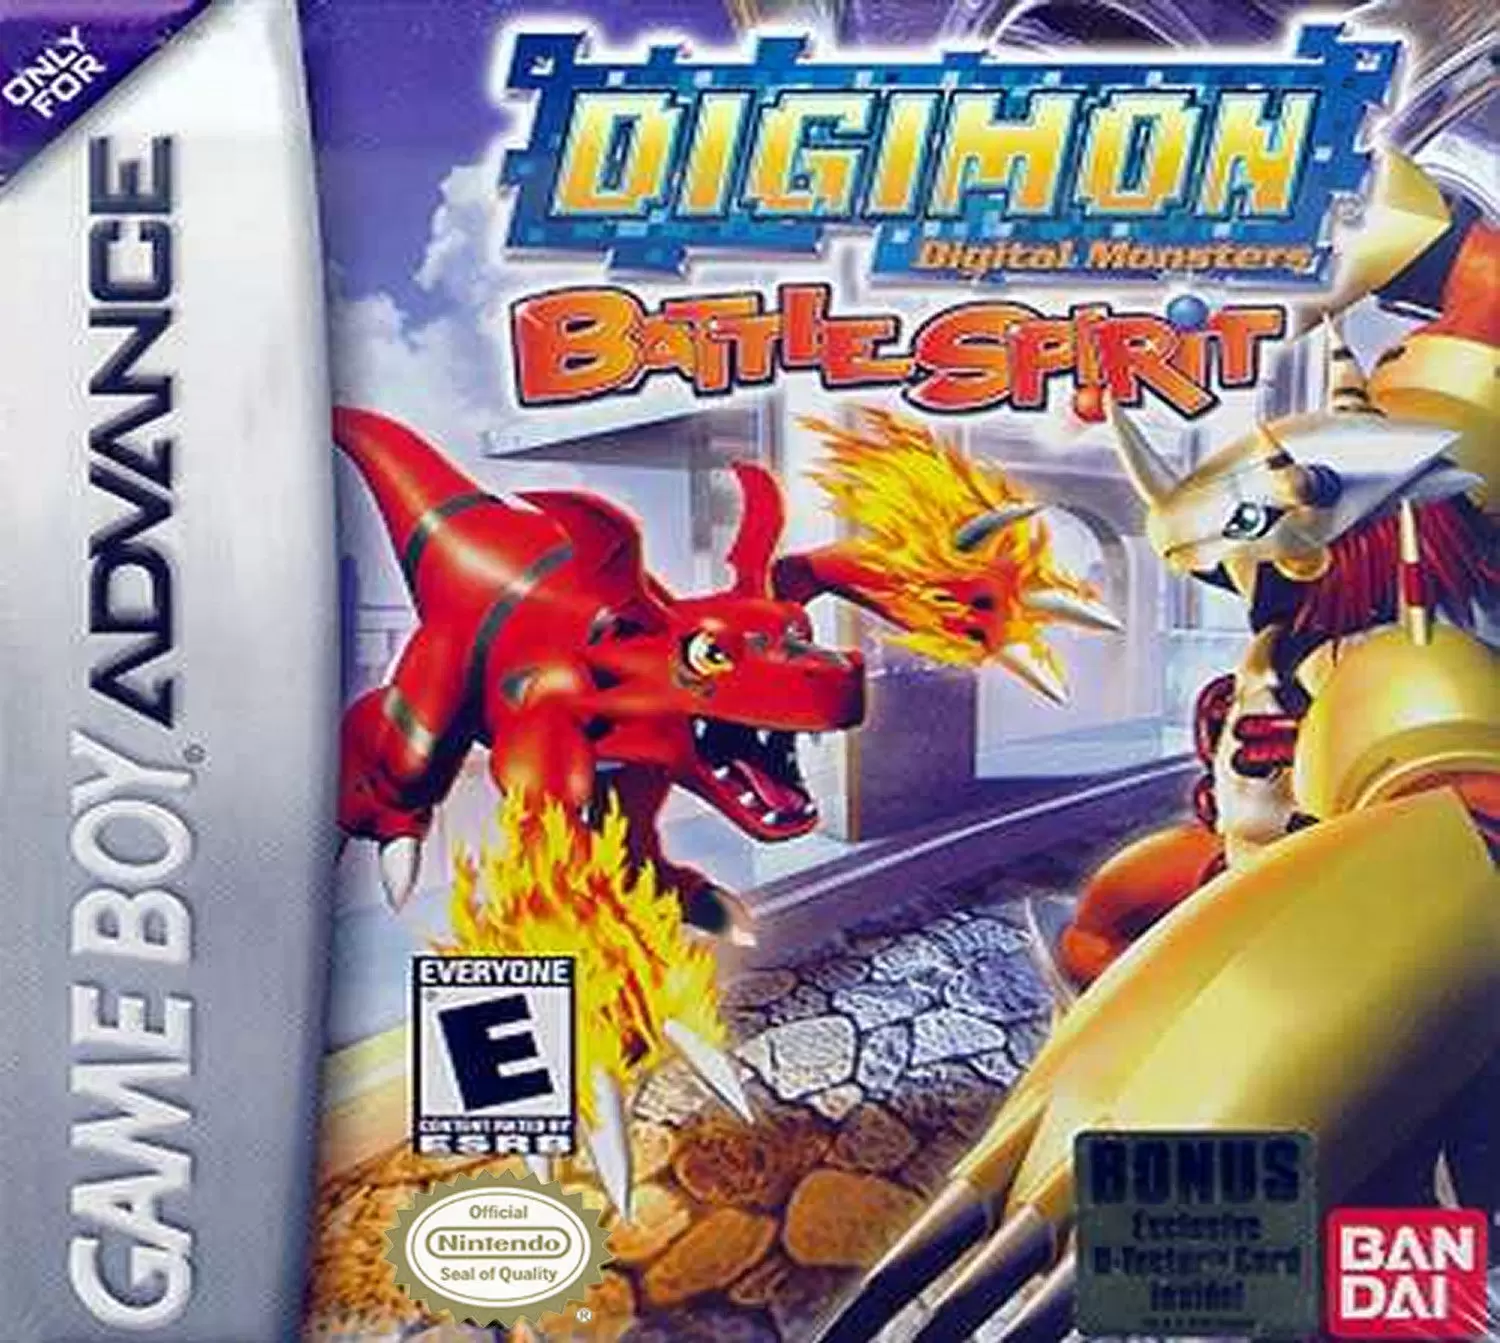 Game Boy Advance Games - Digimon Battle Spirit